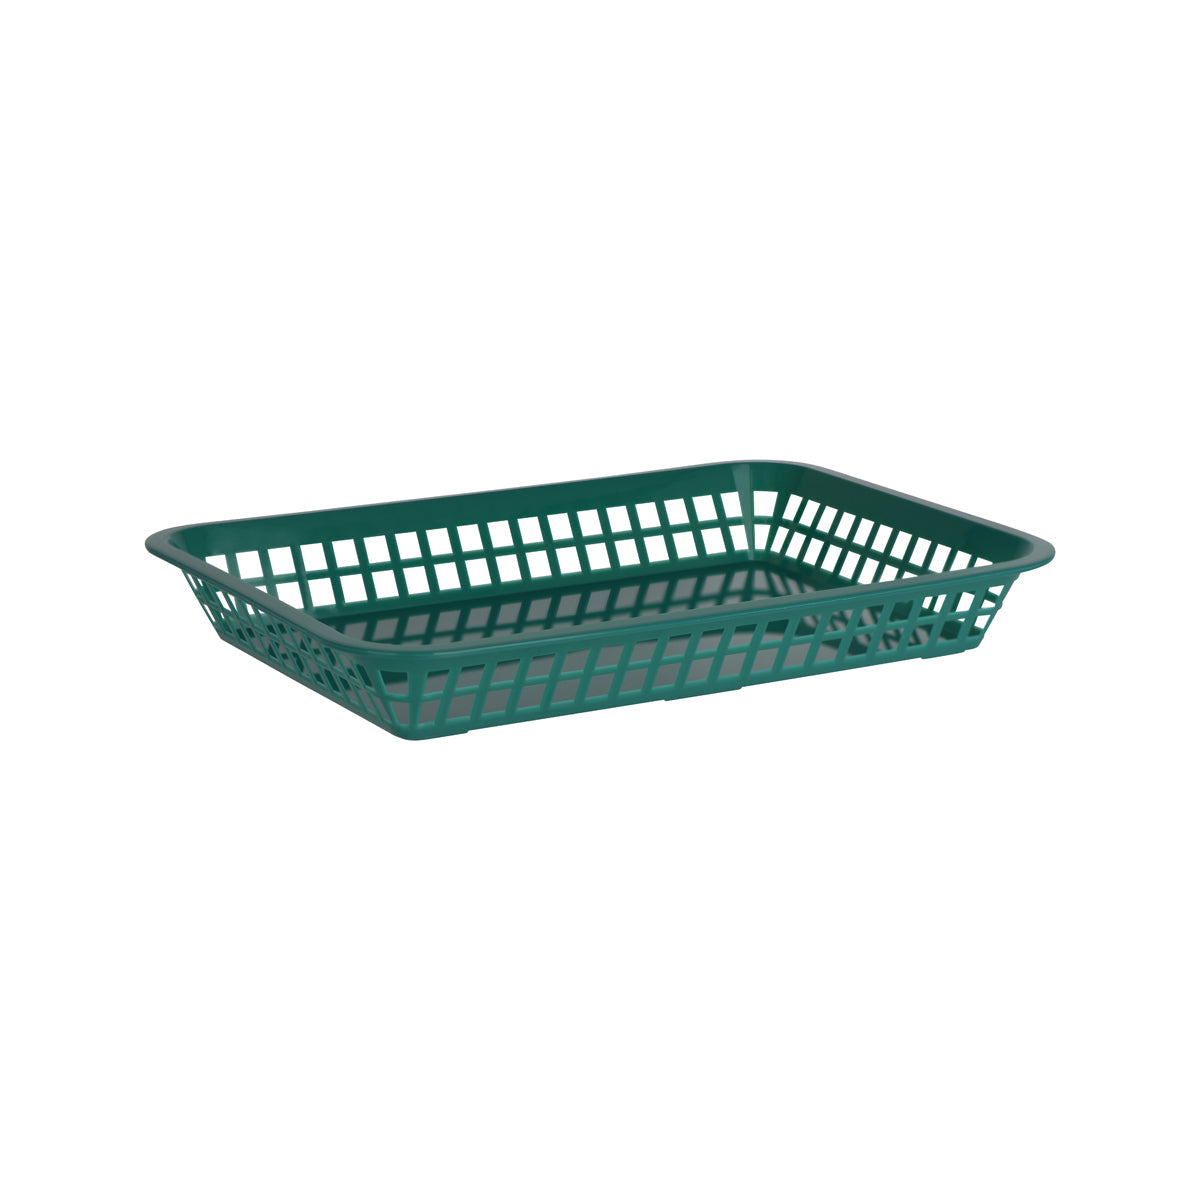 78698 Chef Inox Coney Island Rectangular Basket Plastic Forest Green 300x215mm Tomkin Australia Hospitality Supplies